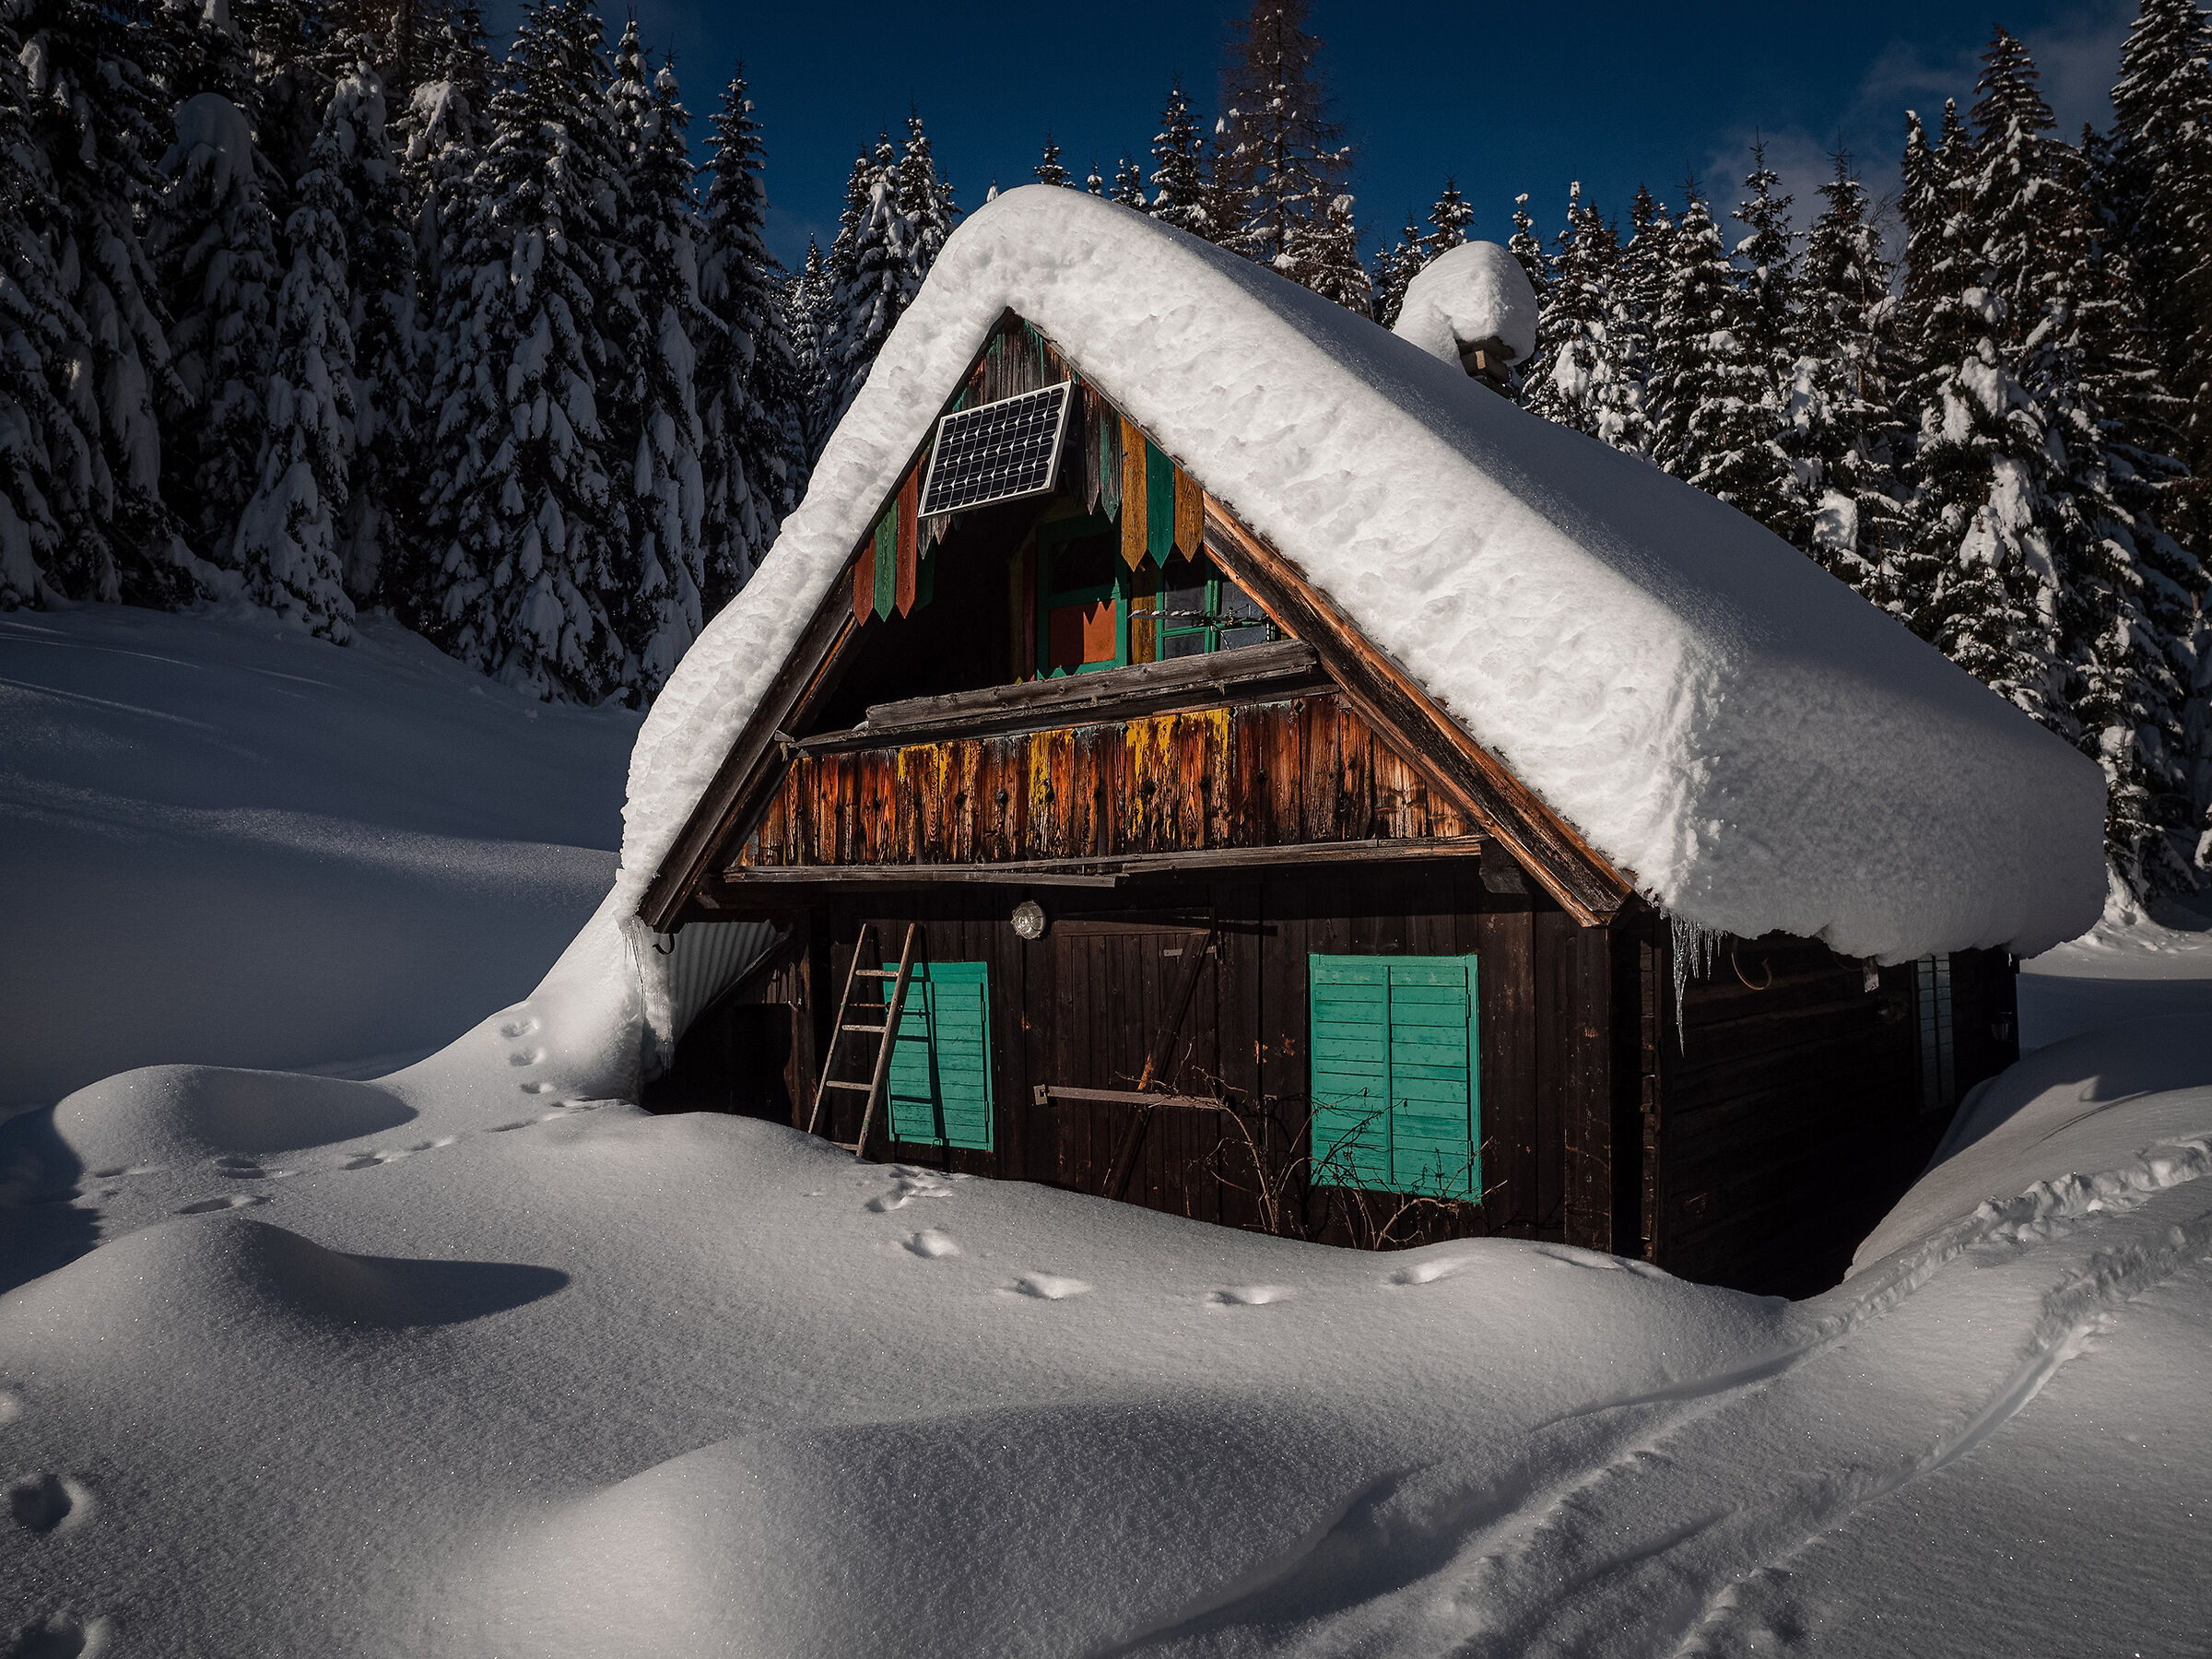 Winter silence - Eastern Carnic Alps...